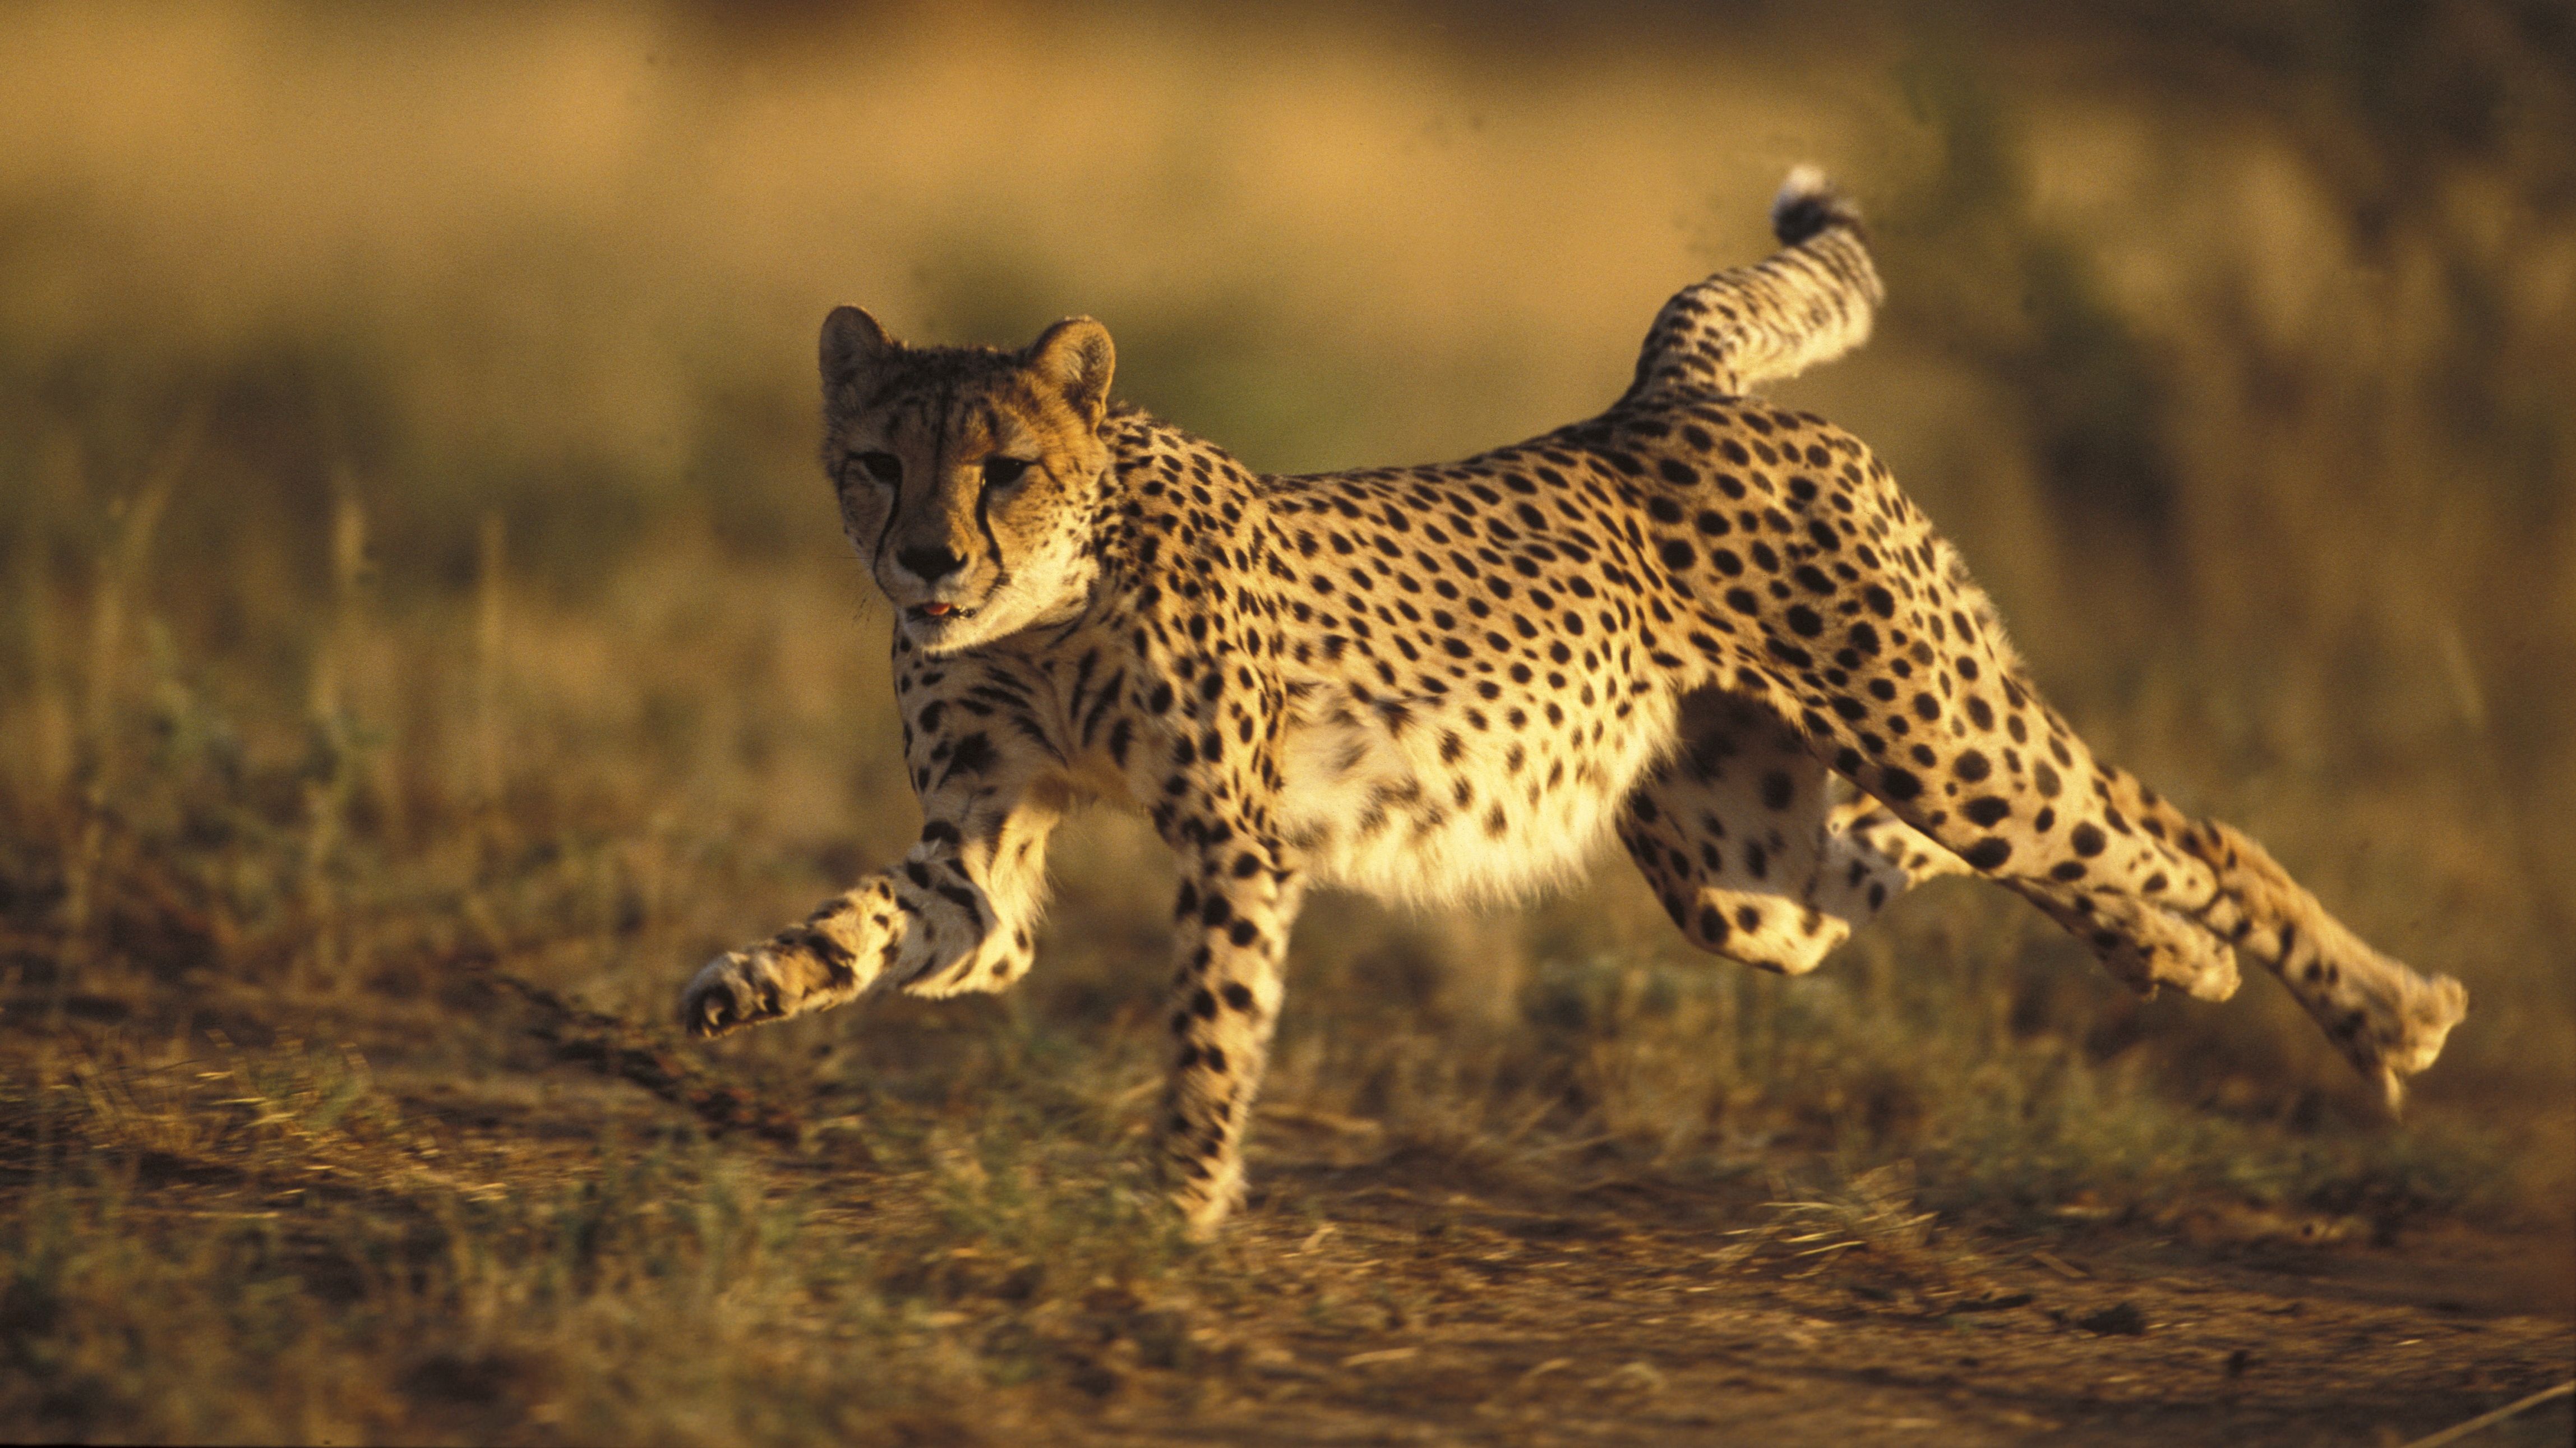 Cheetah ultra hd wallpapers